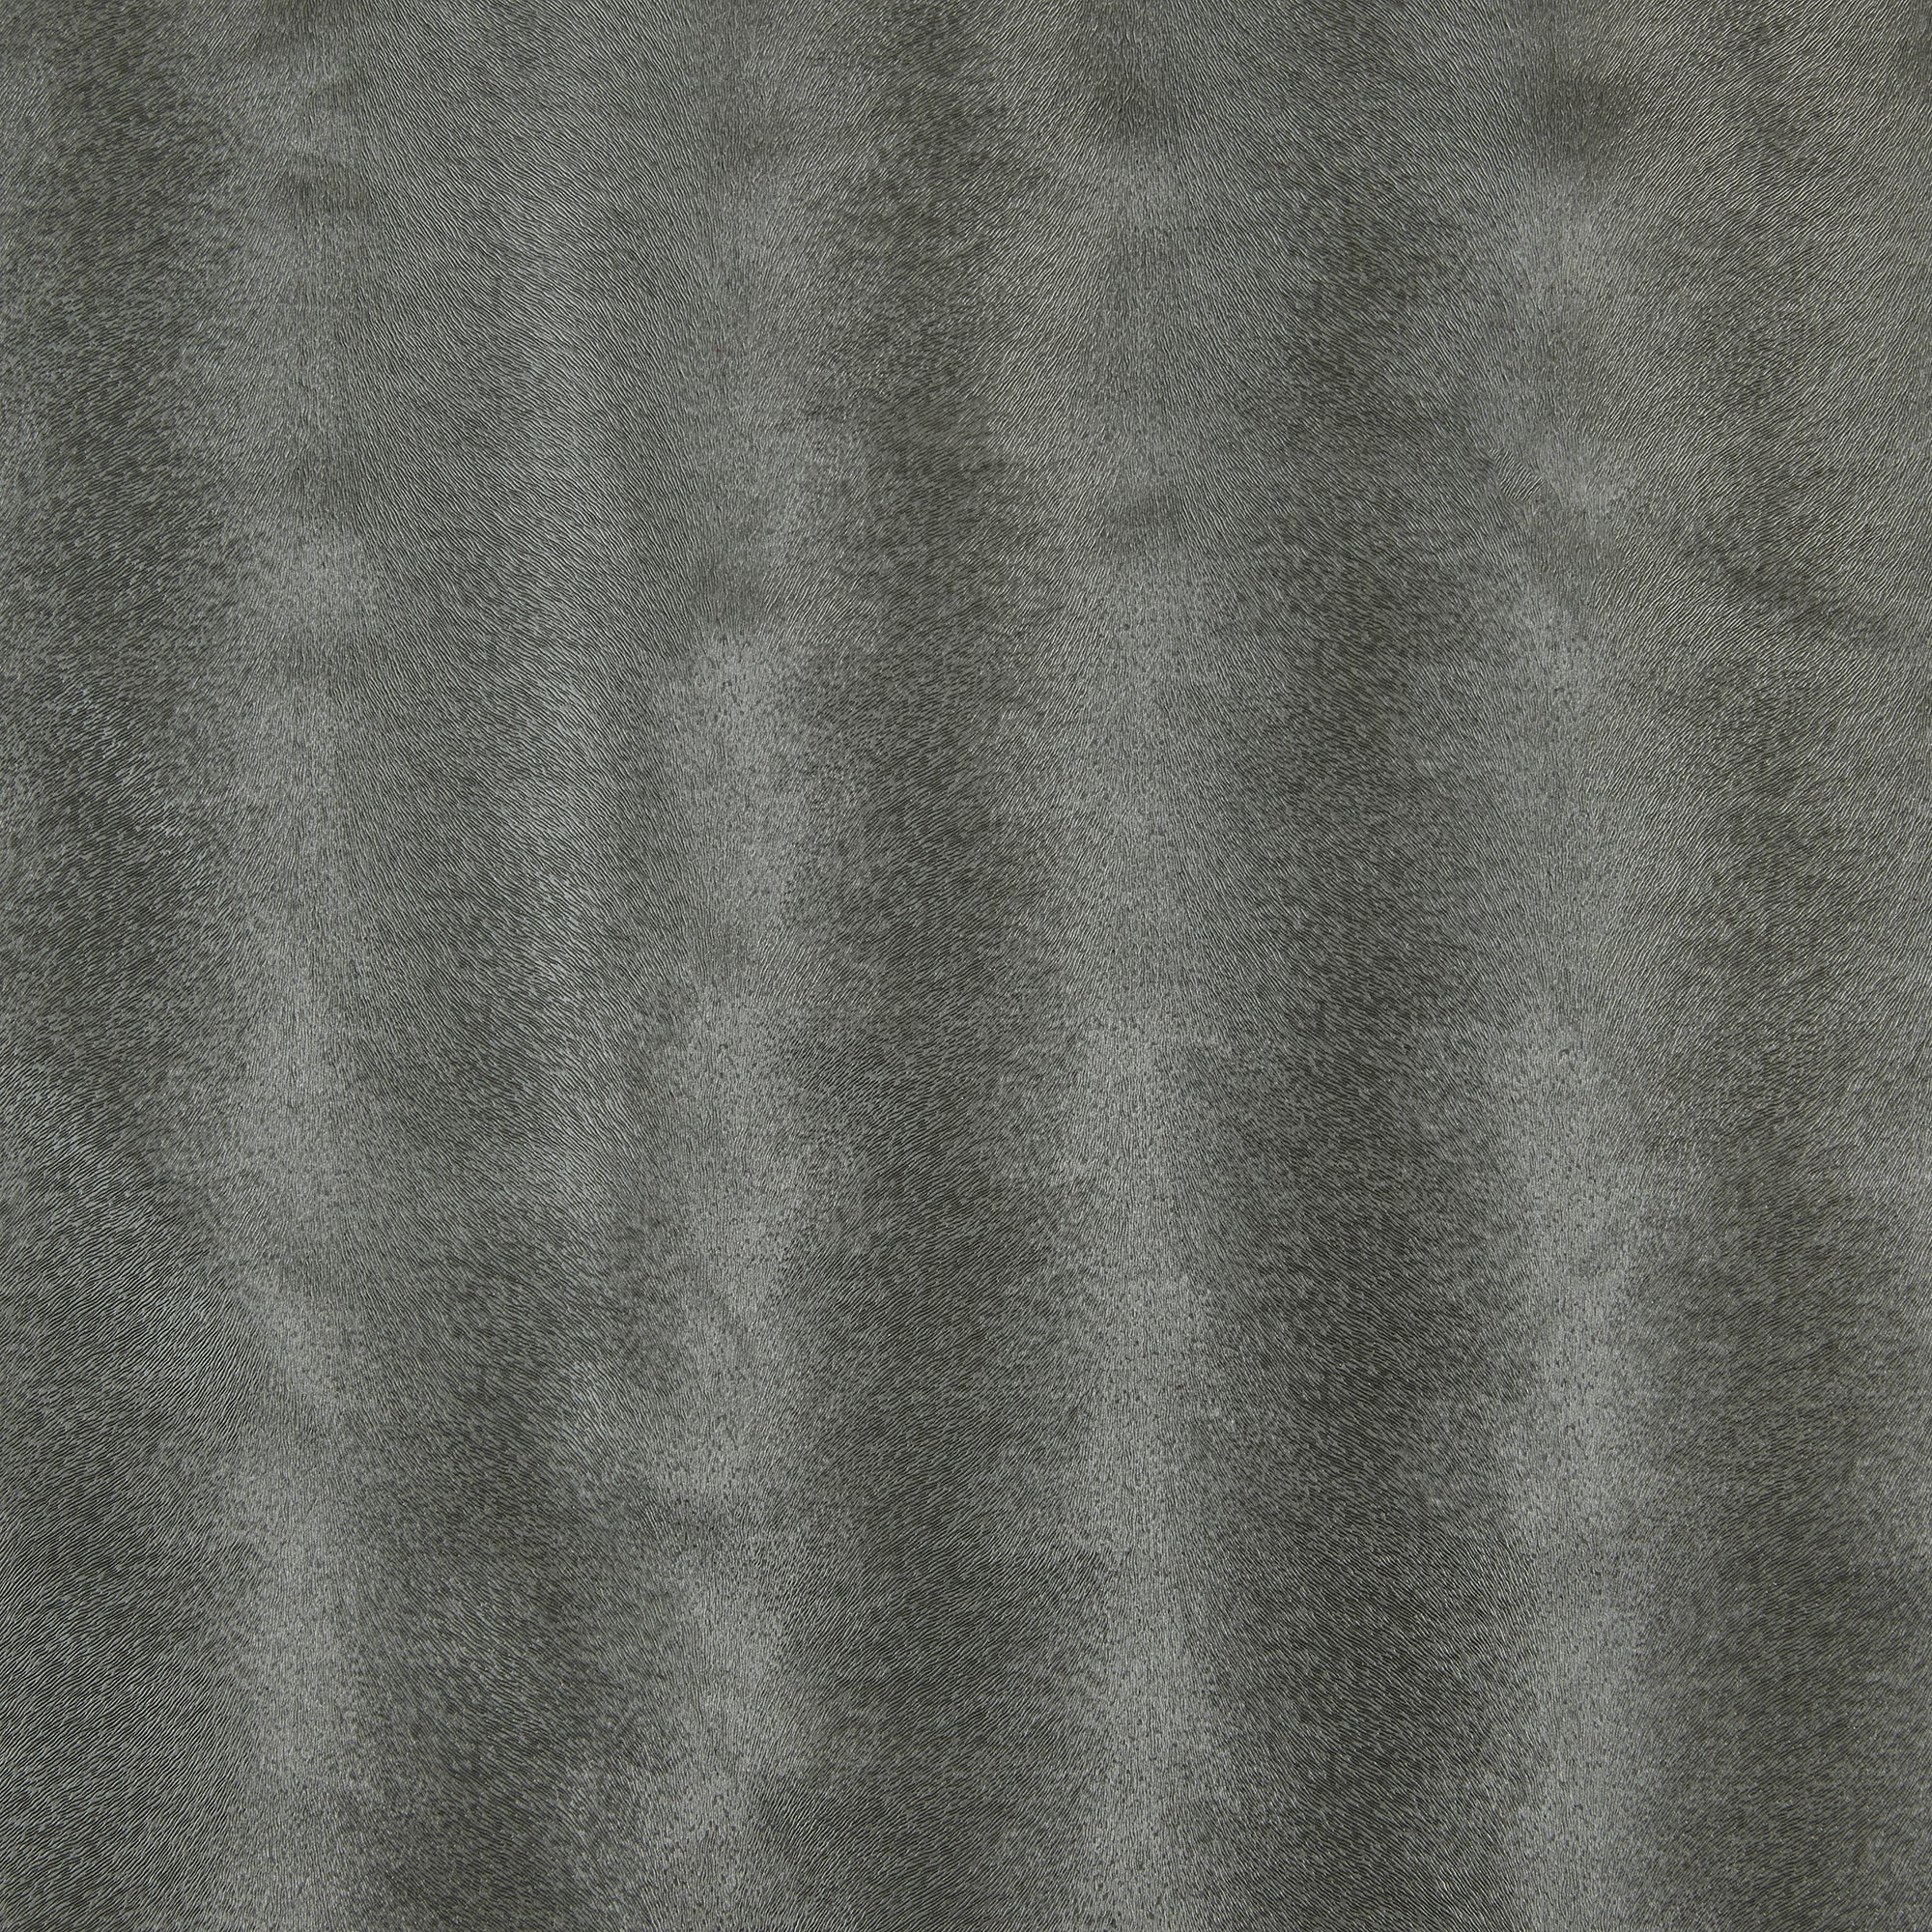 Textured Fur Fabric, Metallic Silver